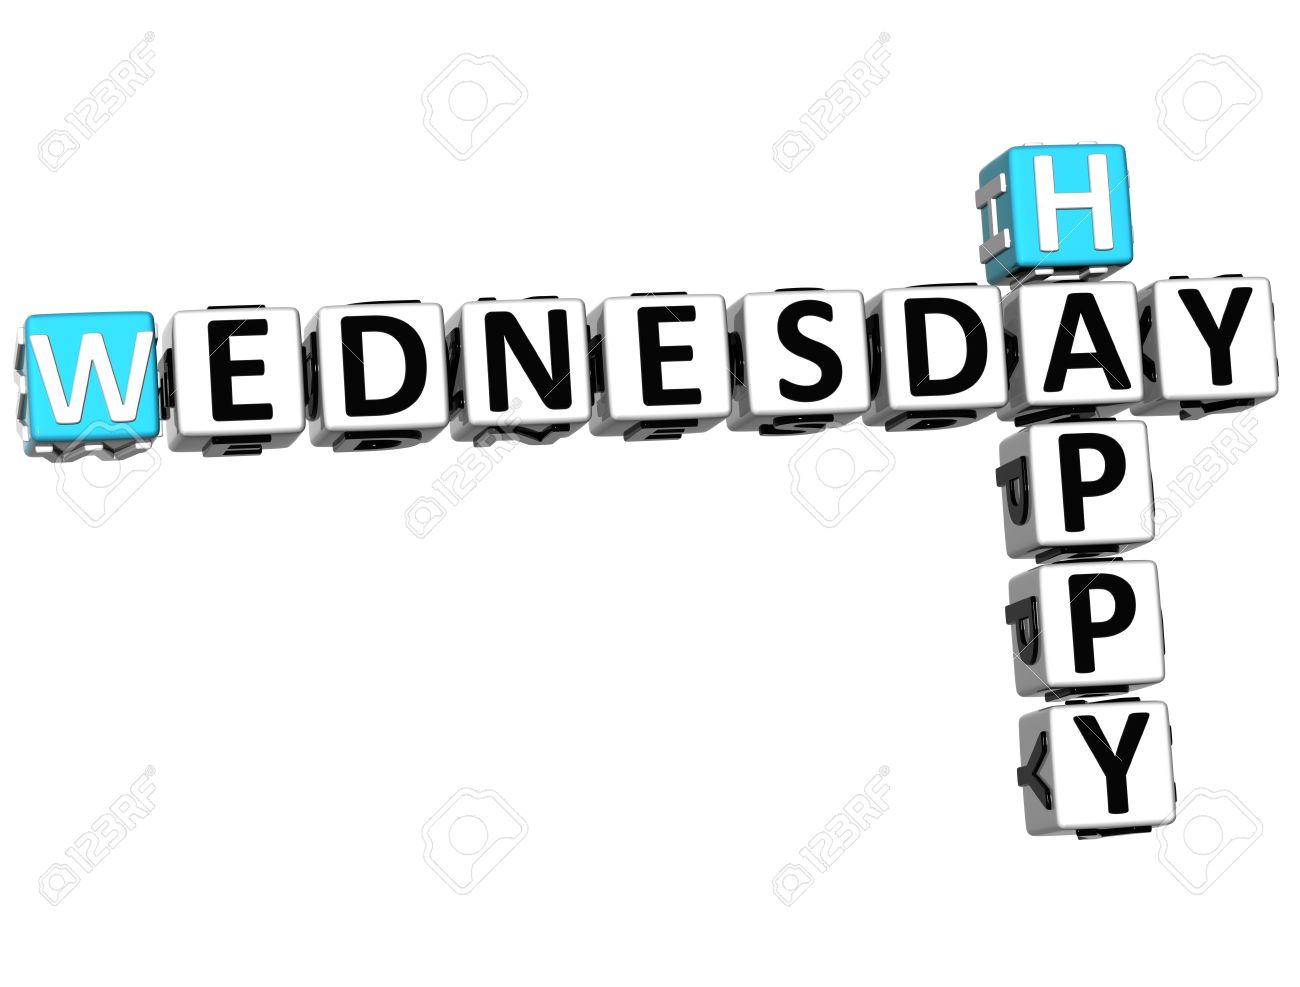 happy thursday: 3D Happy Wednesday Crossword on white background